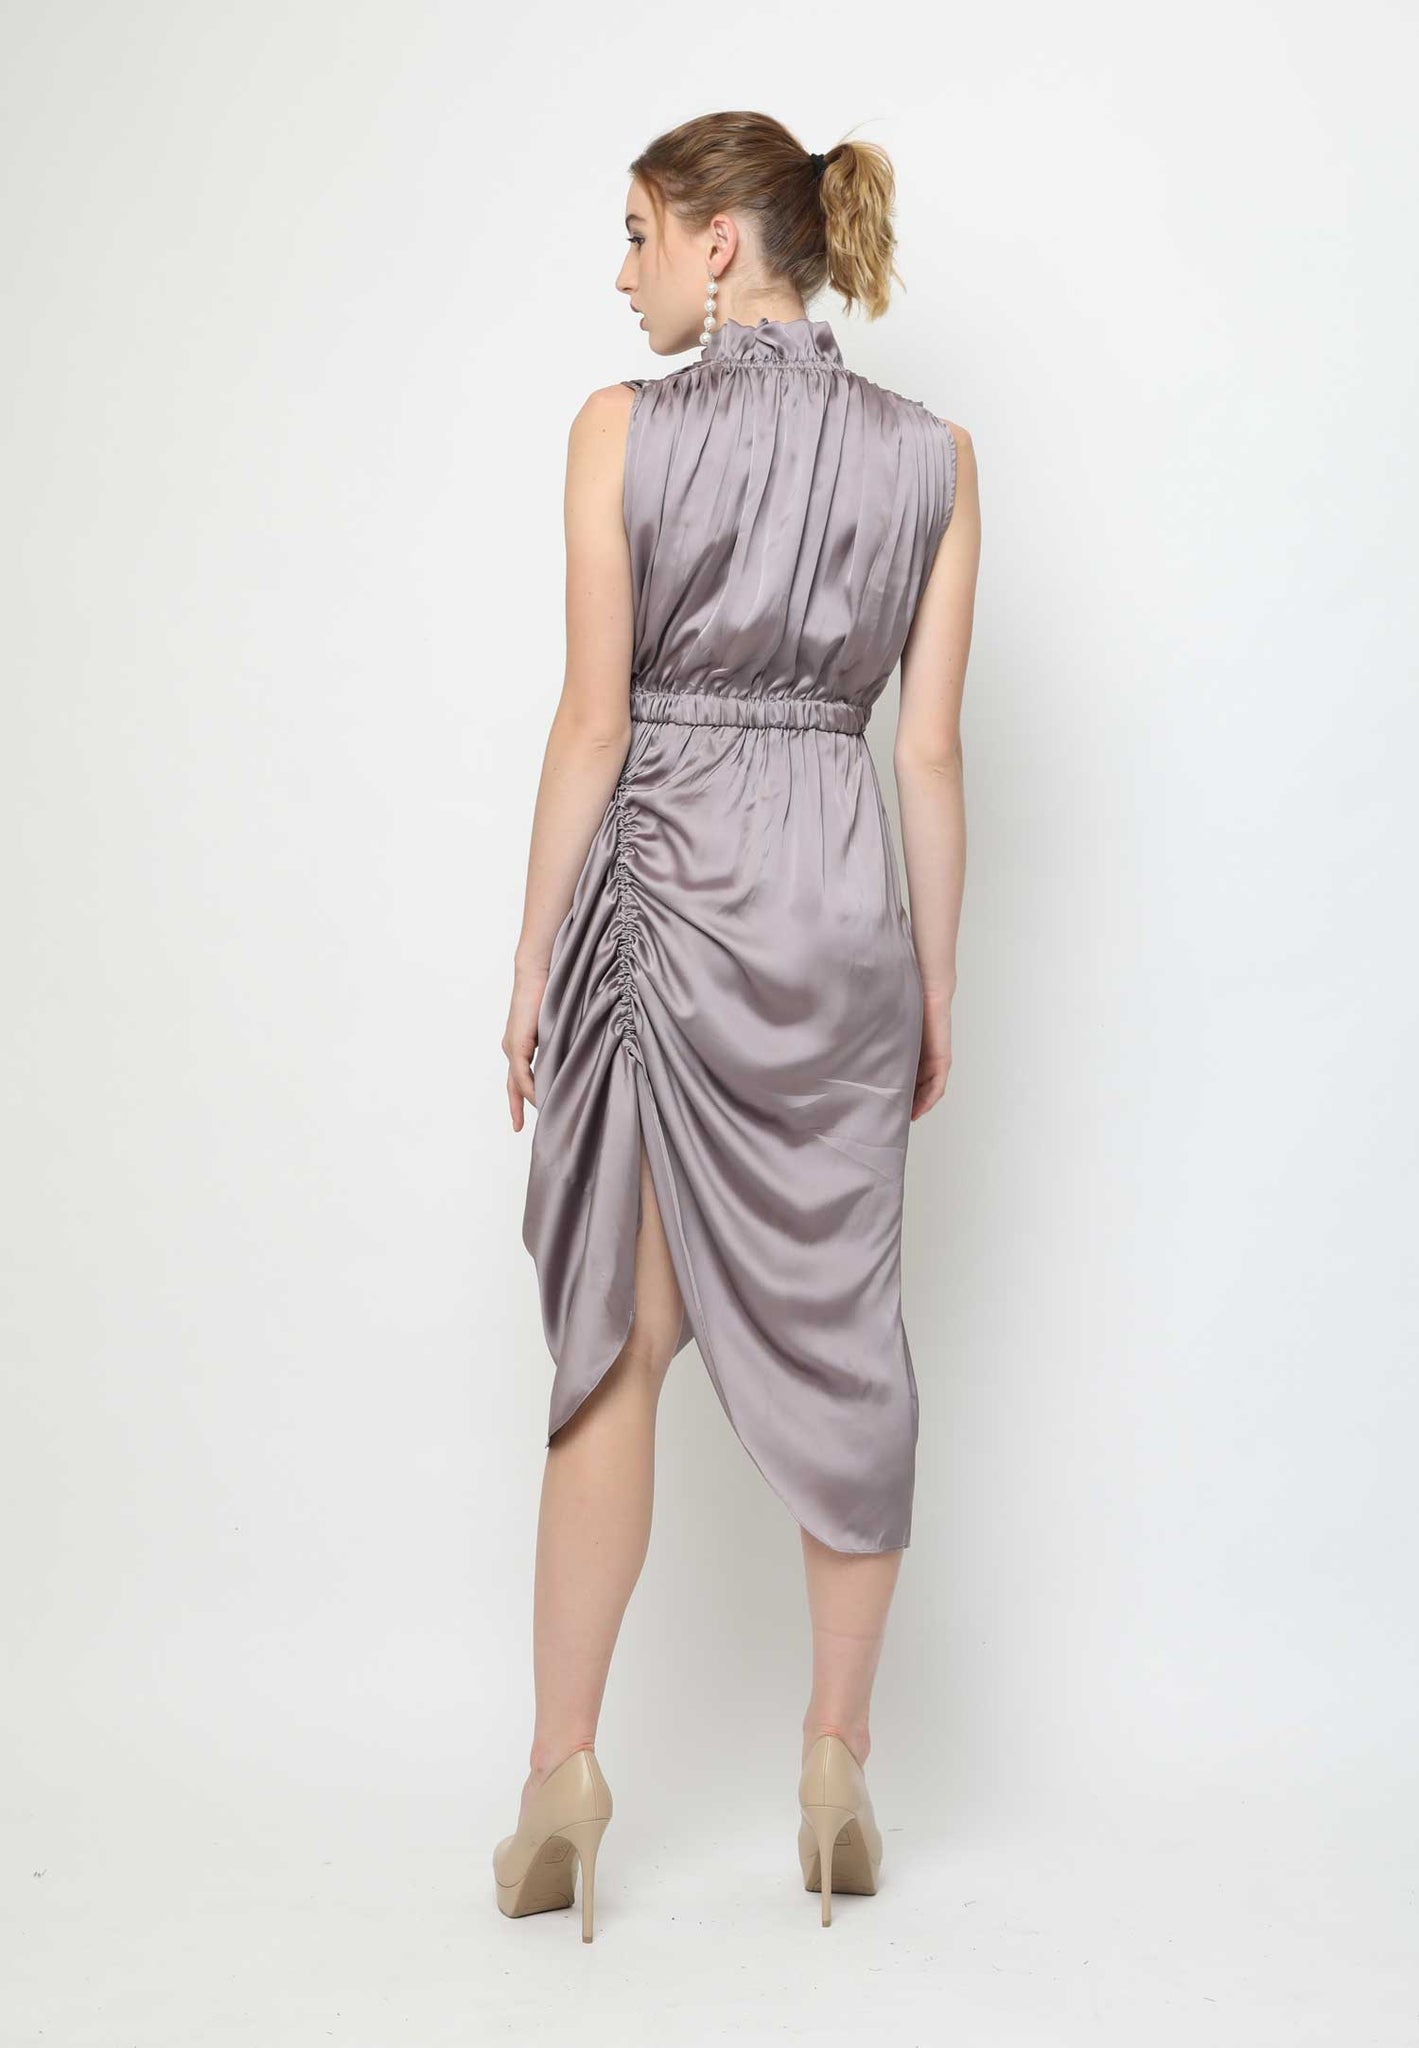 Ava. Arched Dress - Grey